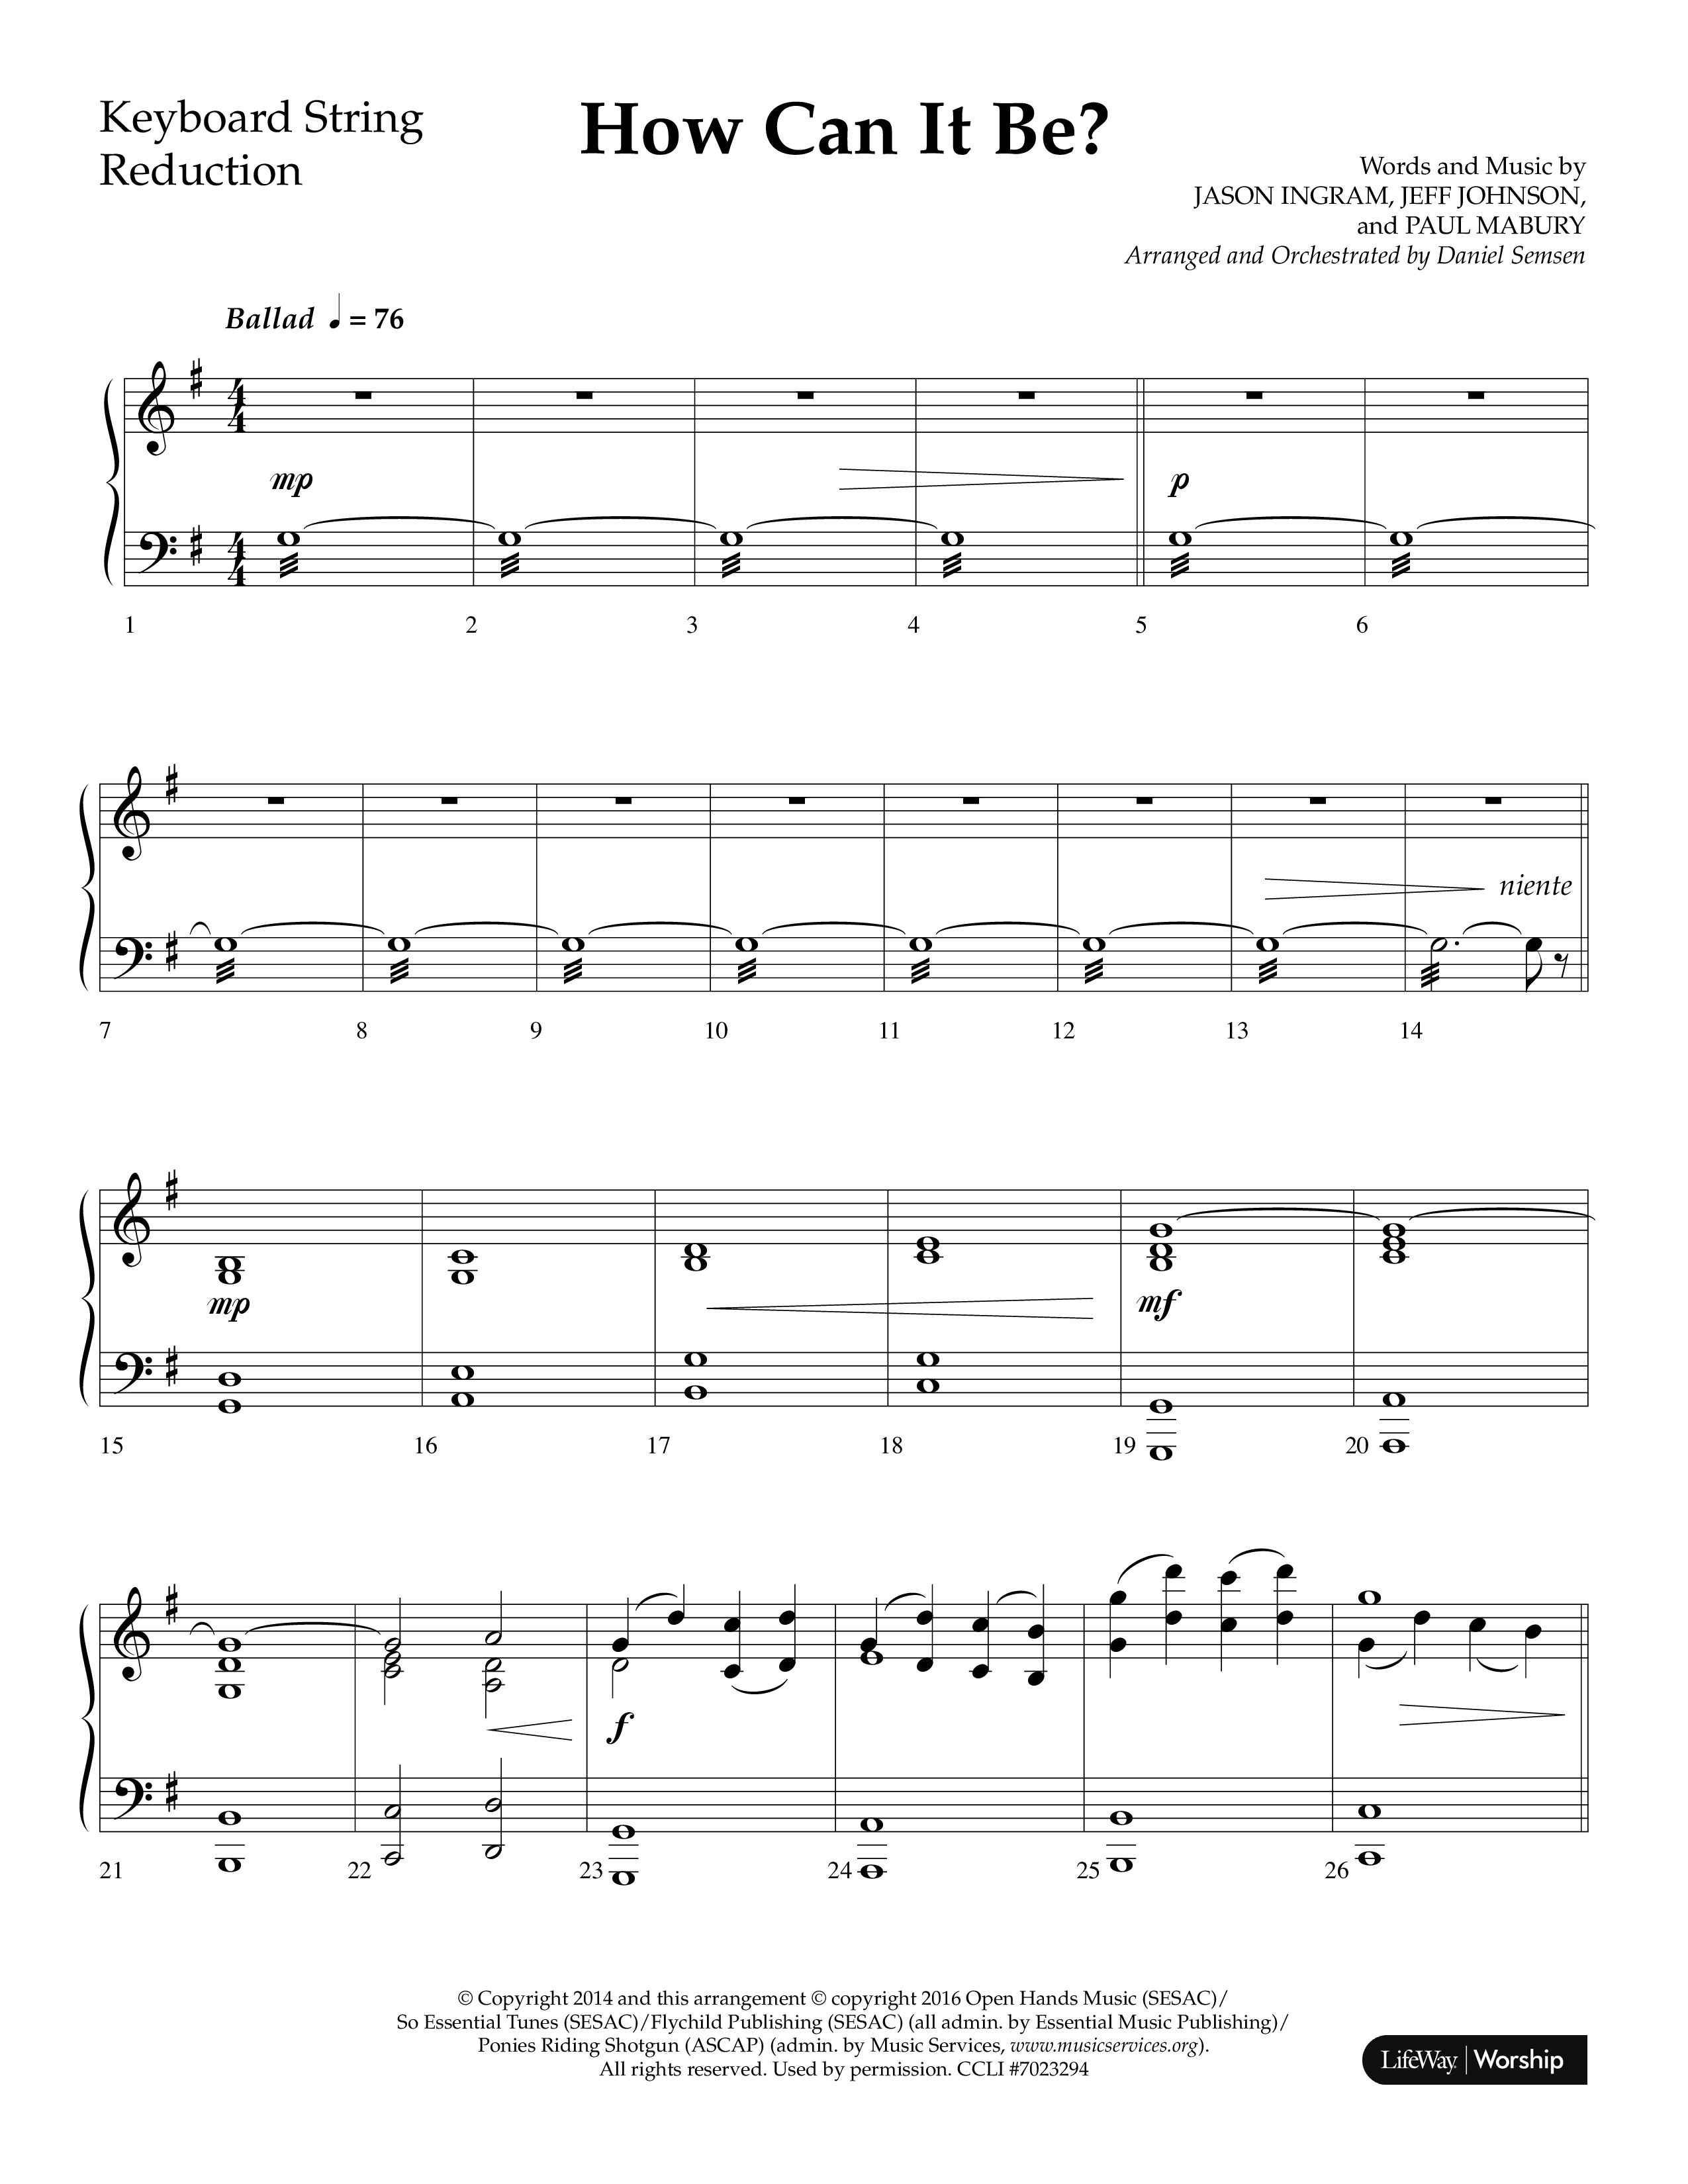 How Can It Be (Choral Anthem SATB) String Reduction (Lifeway Choral / Arr. Daniel Semsen)